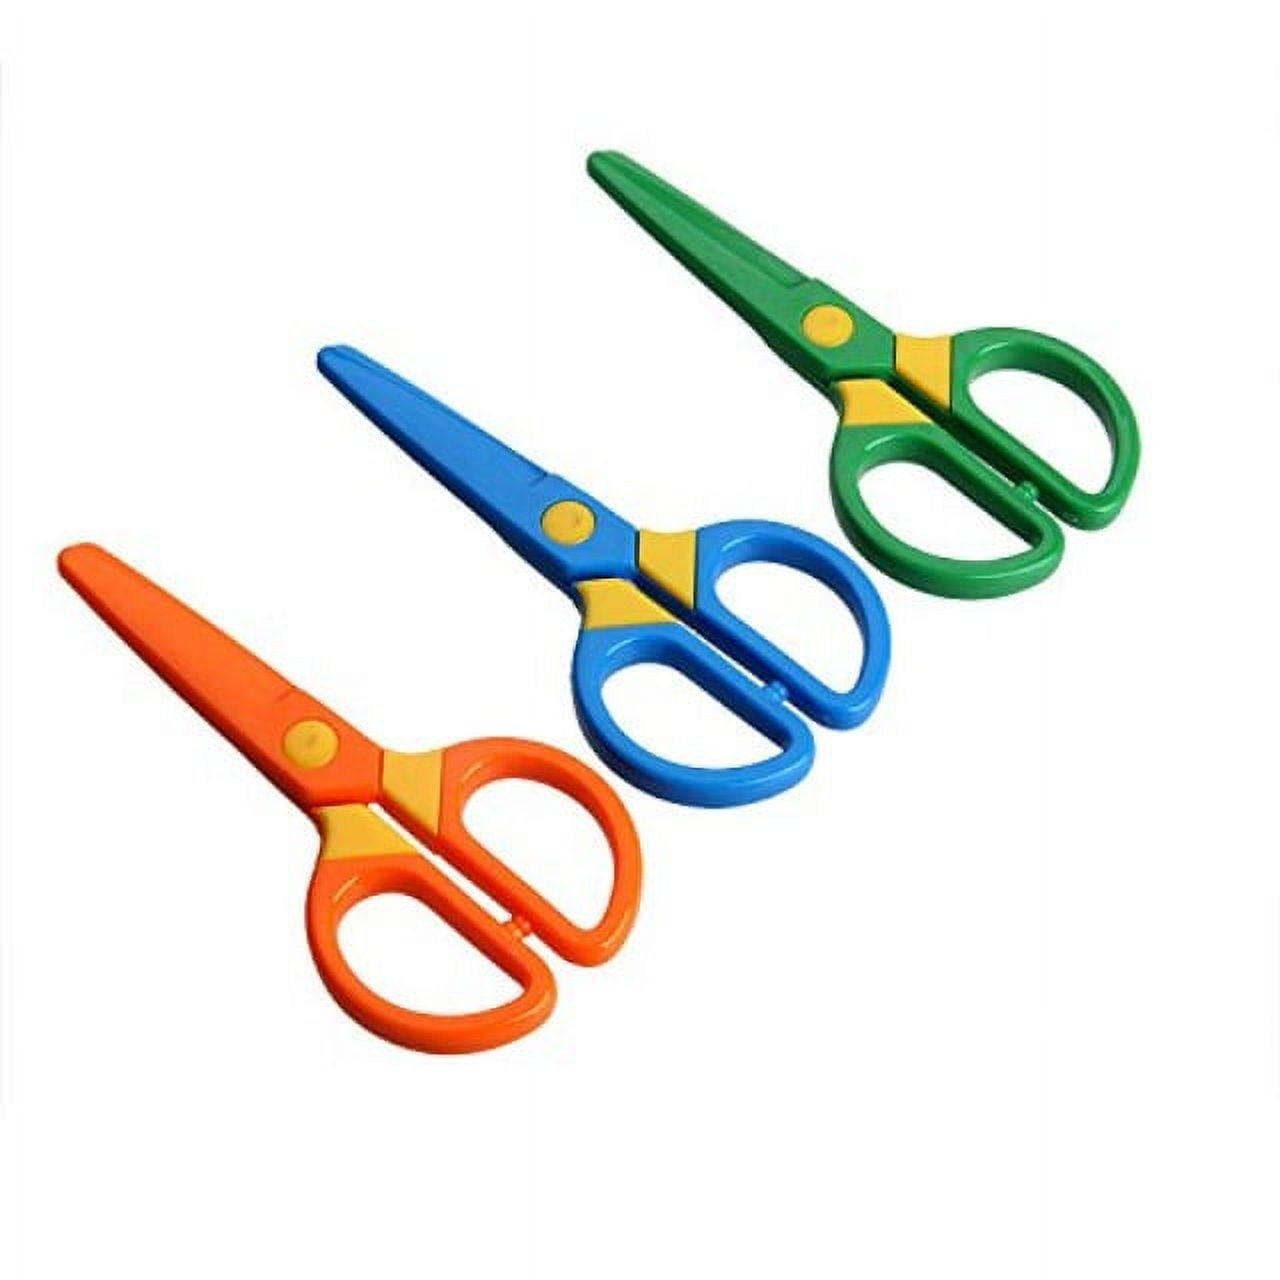 LovesTown Preschool Training Scissors,4Pcs Children Safety Scissors  Pre-School Training Scissors Safety Scissors Art Craft Scissors 